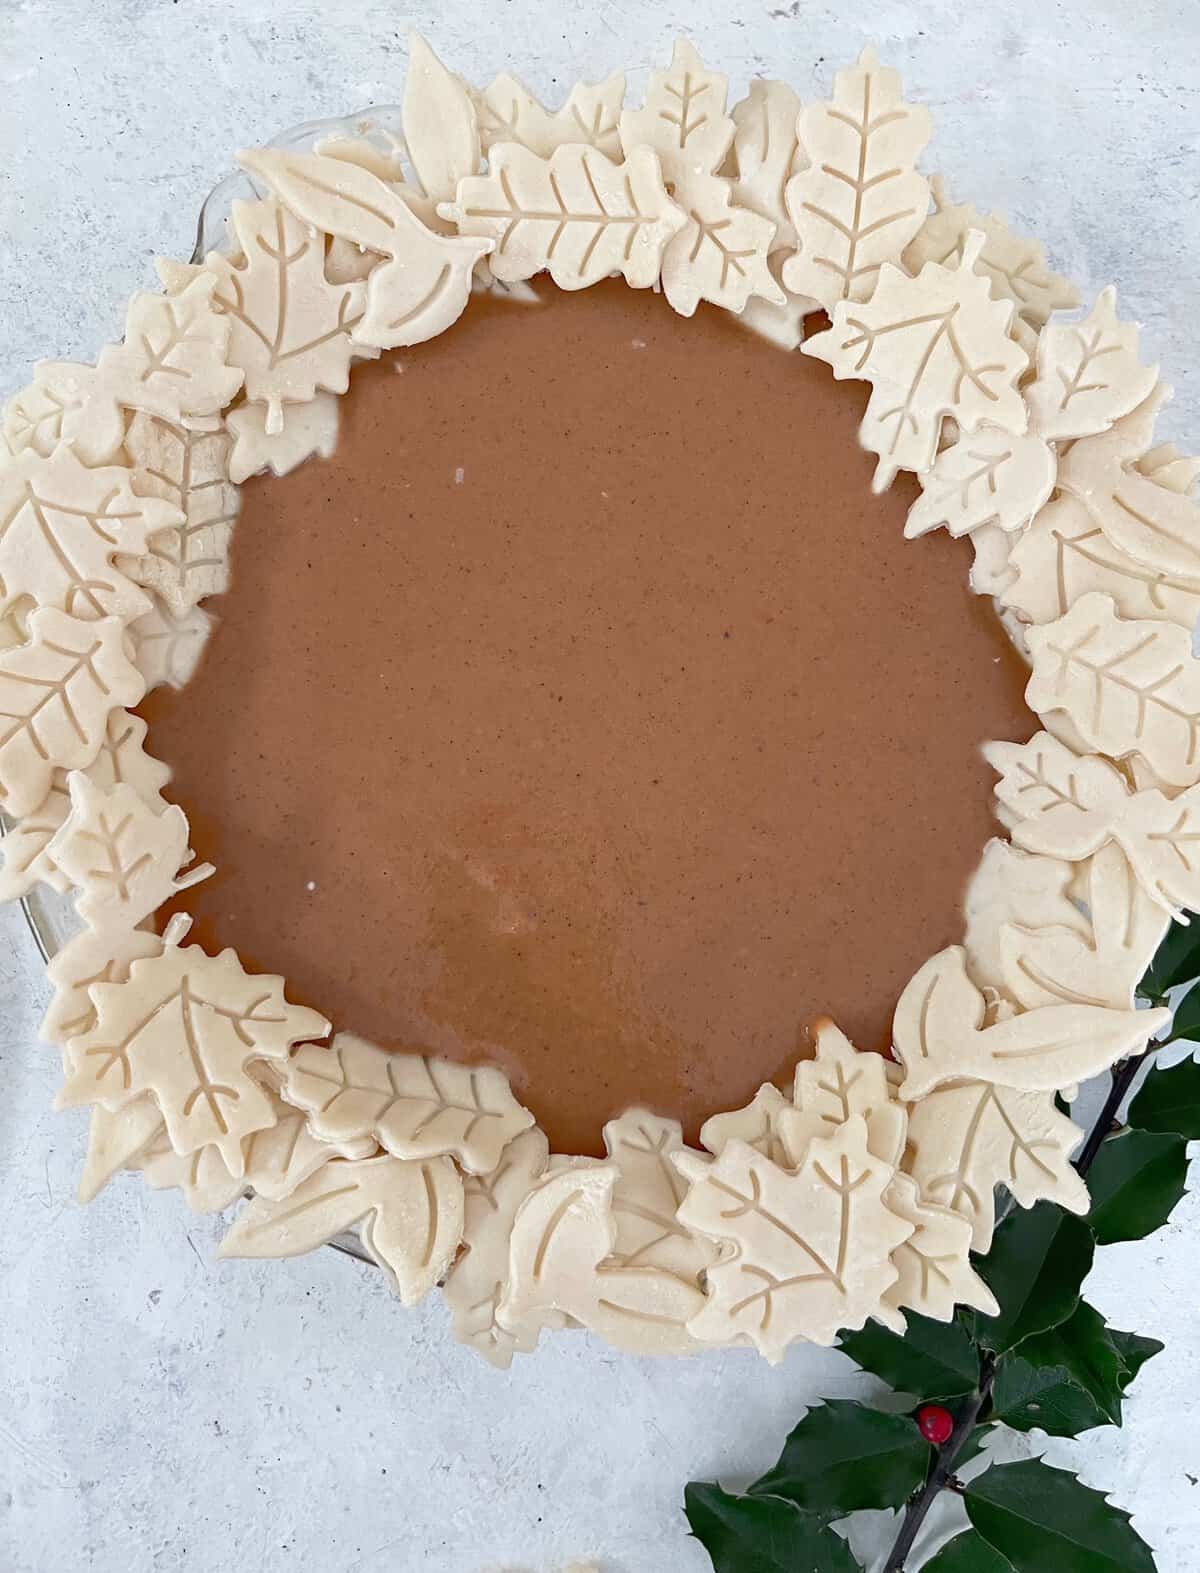 pie crust molds designs